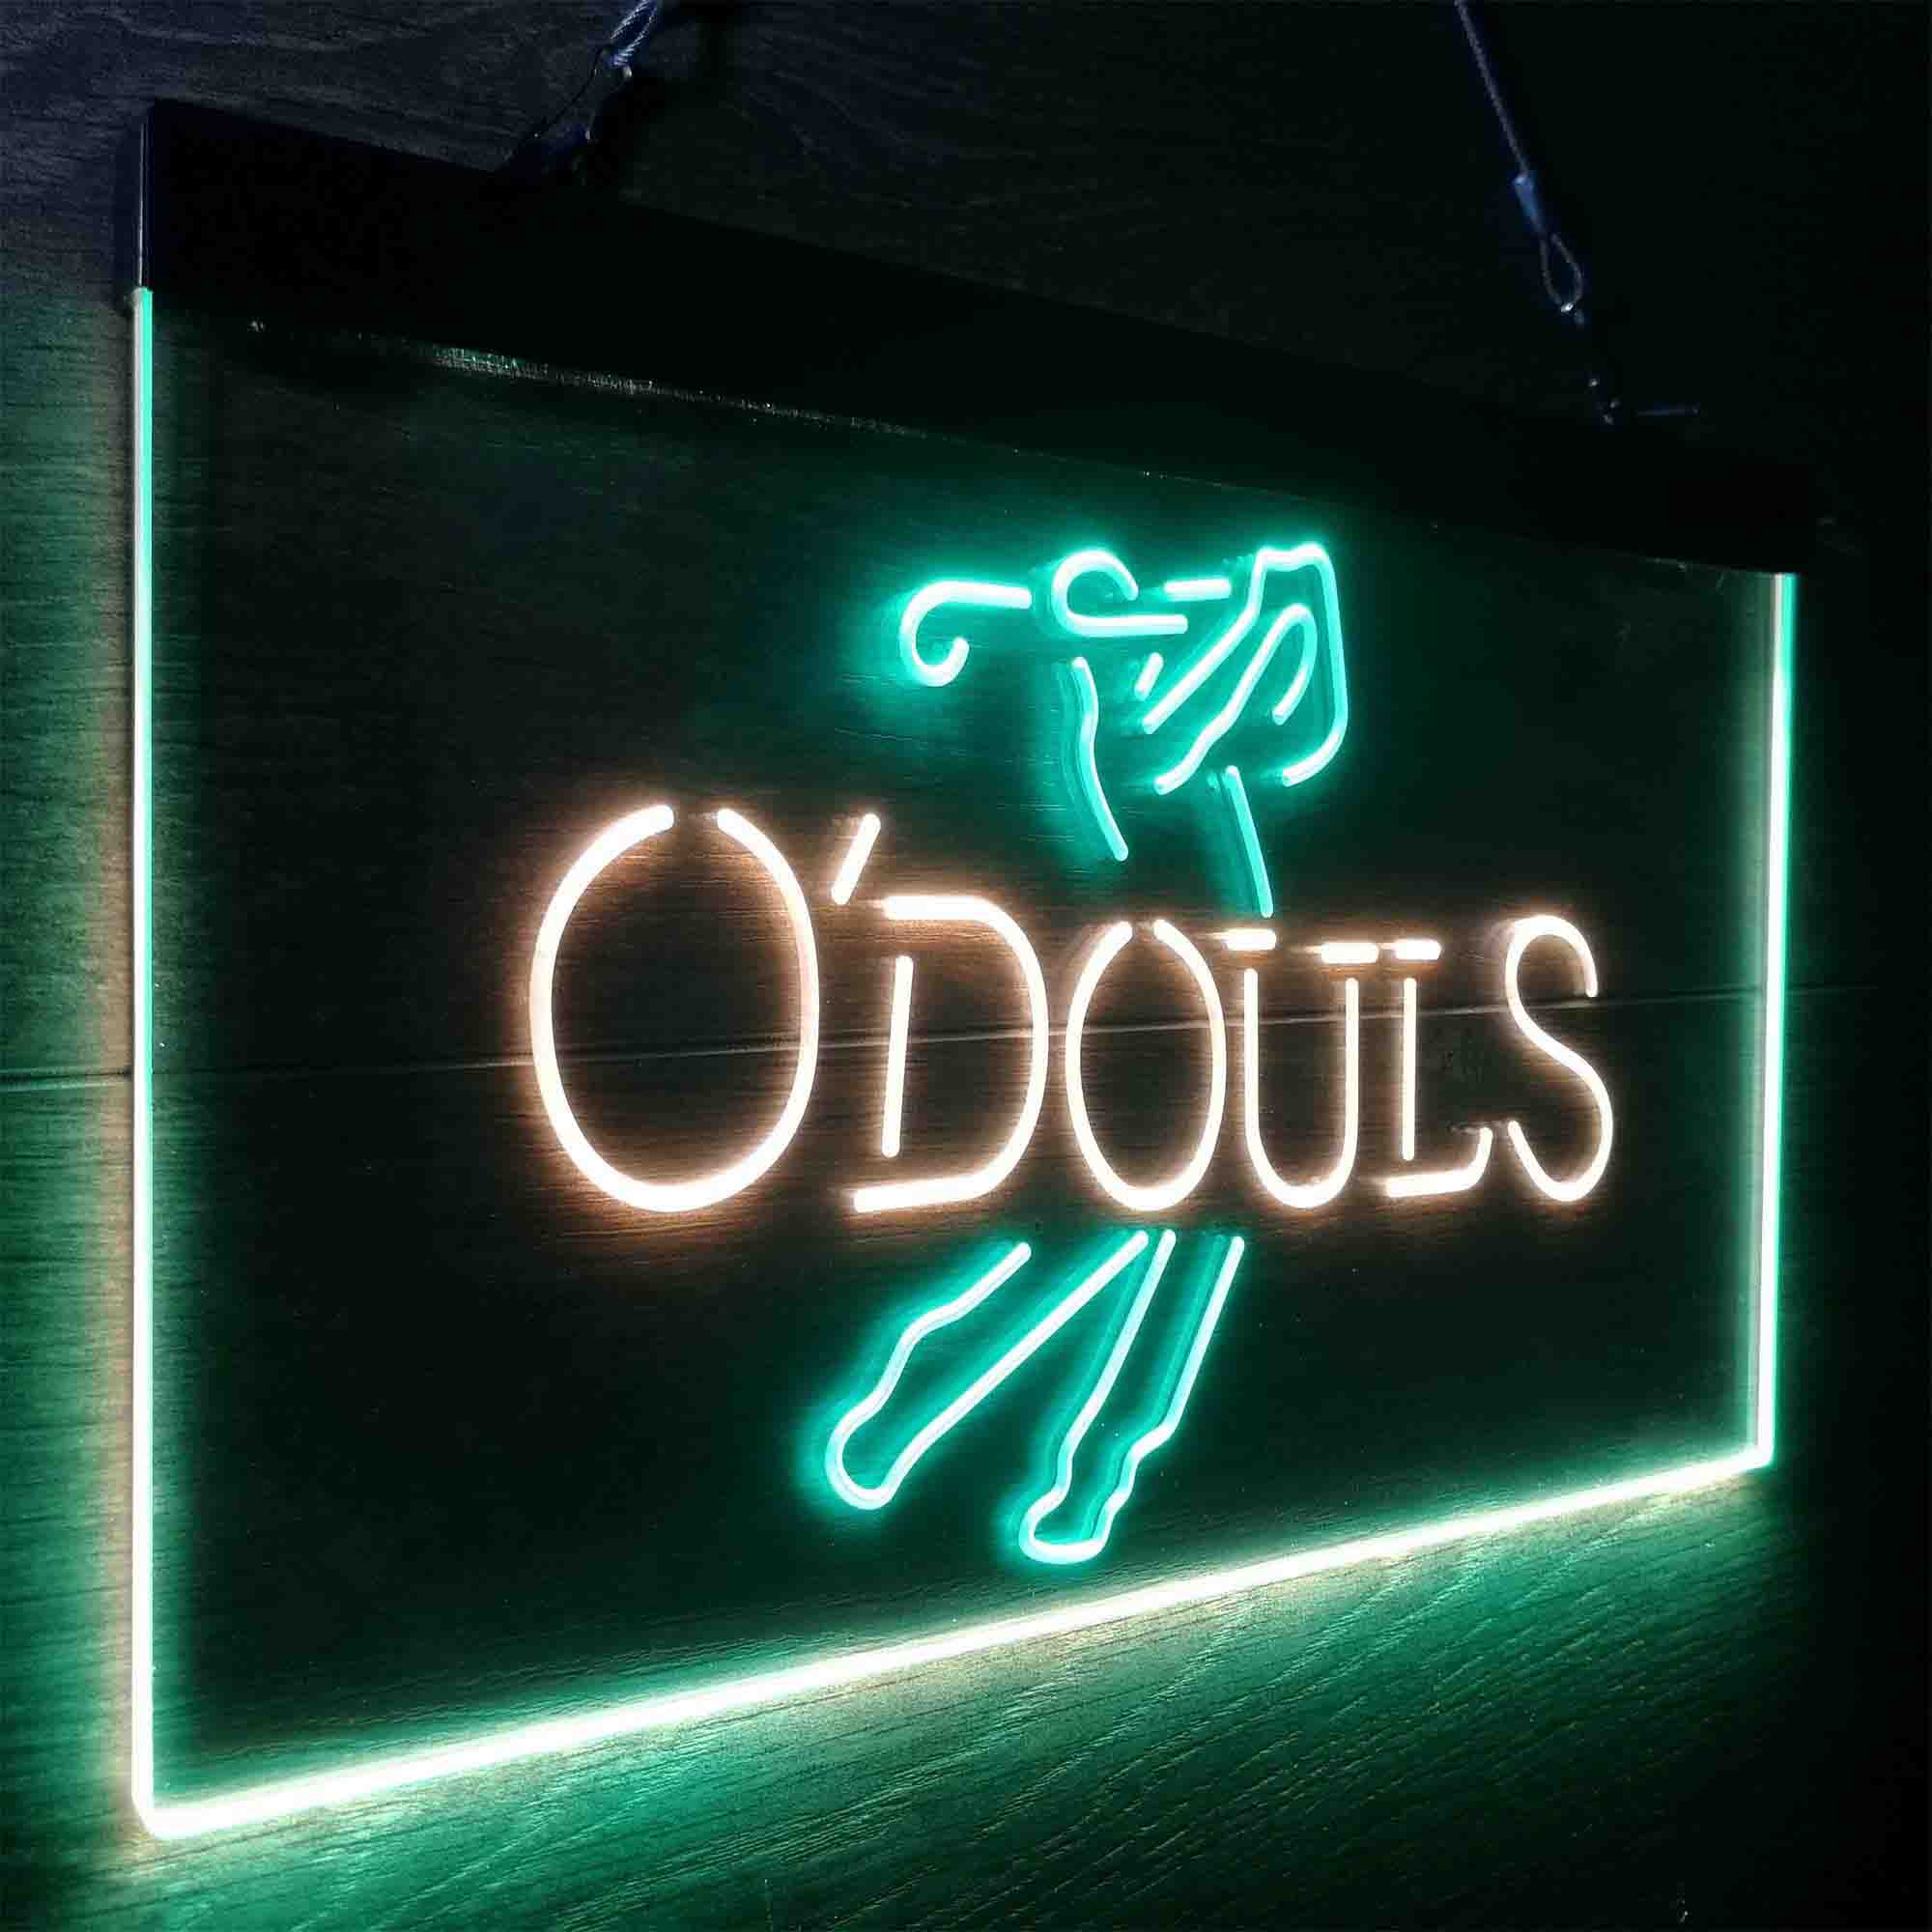 O'Doul's Beer Golfer Neon-Like LED Sign